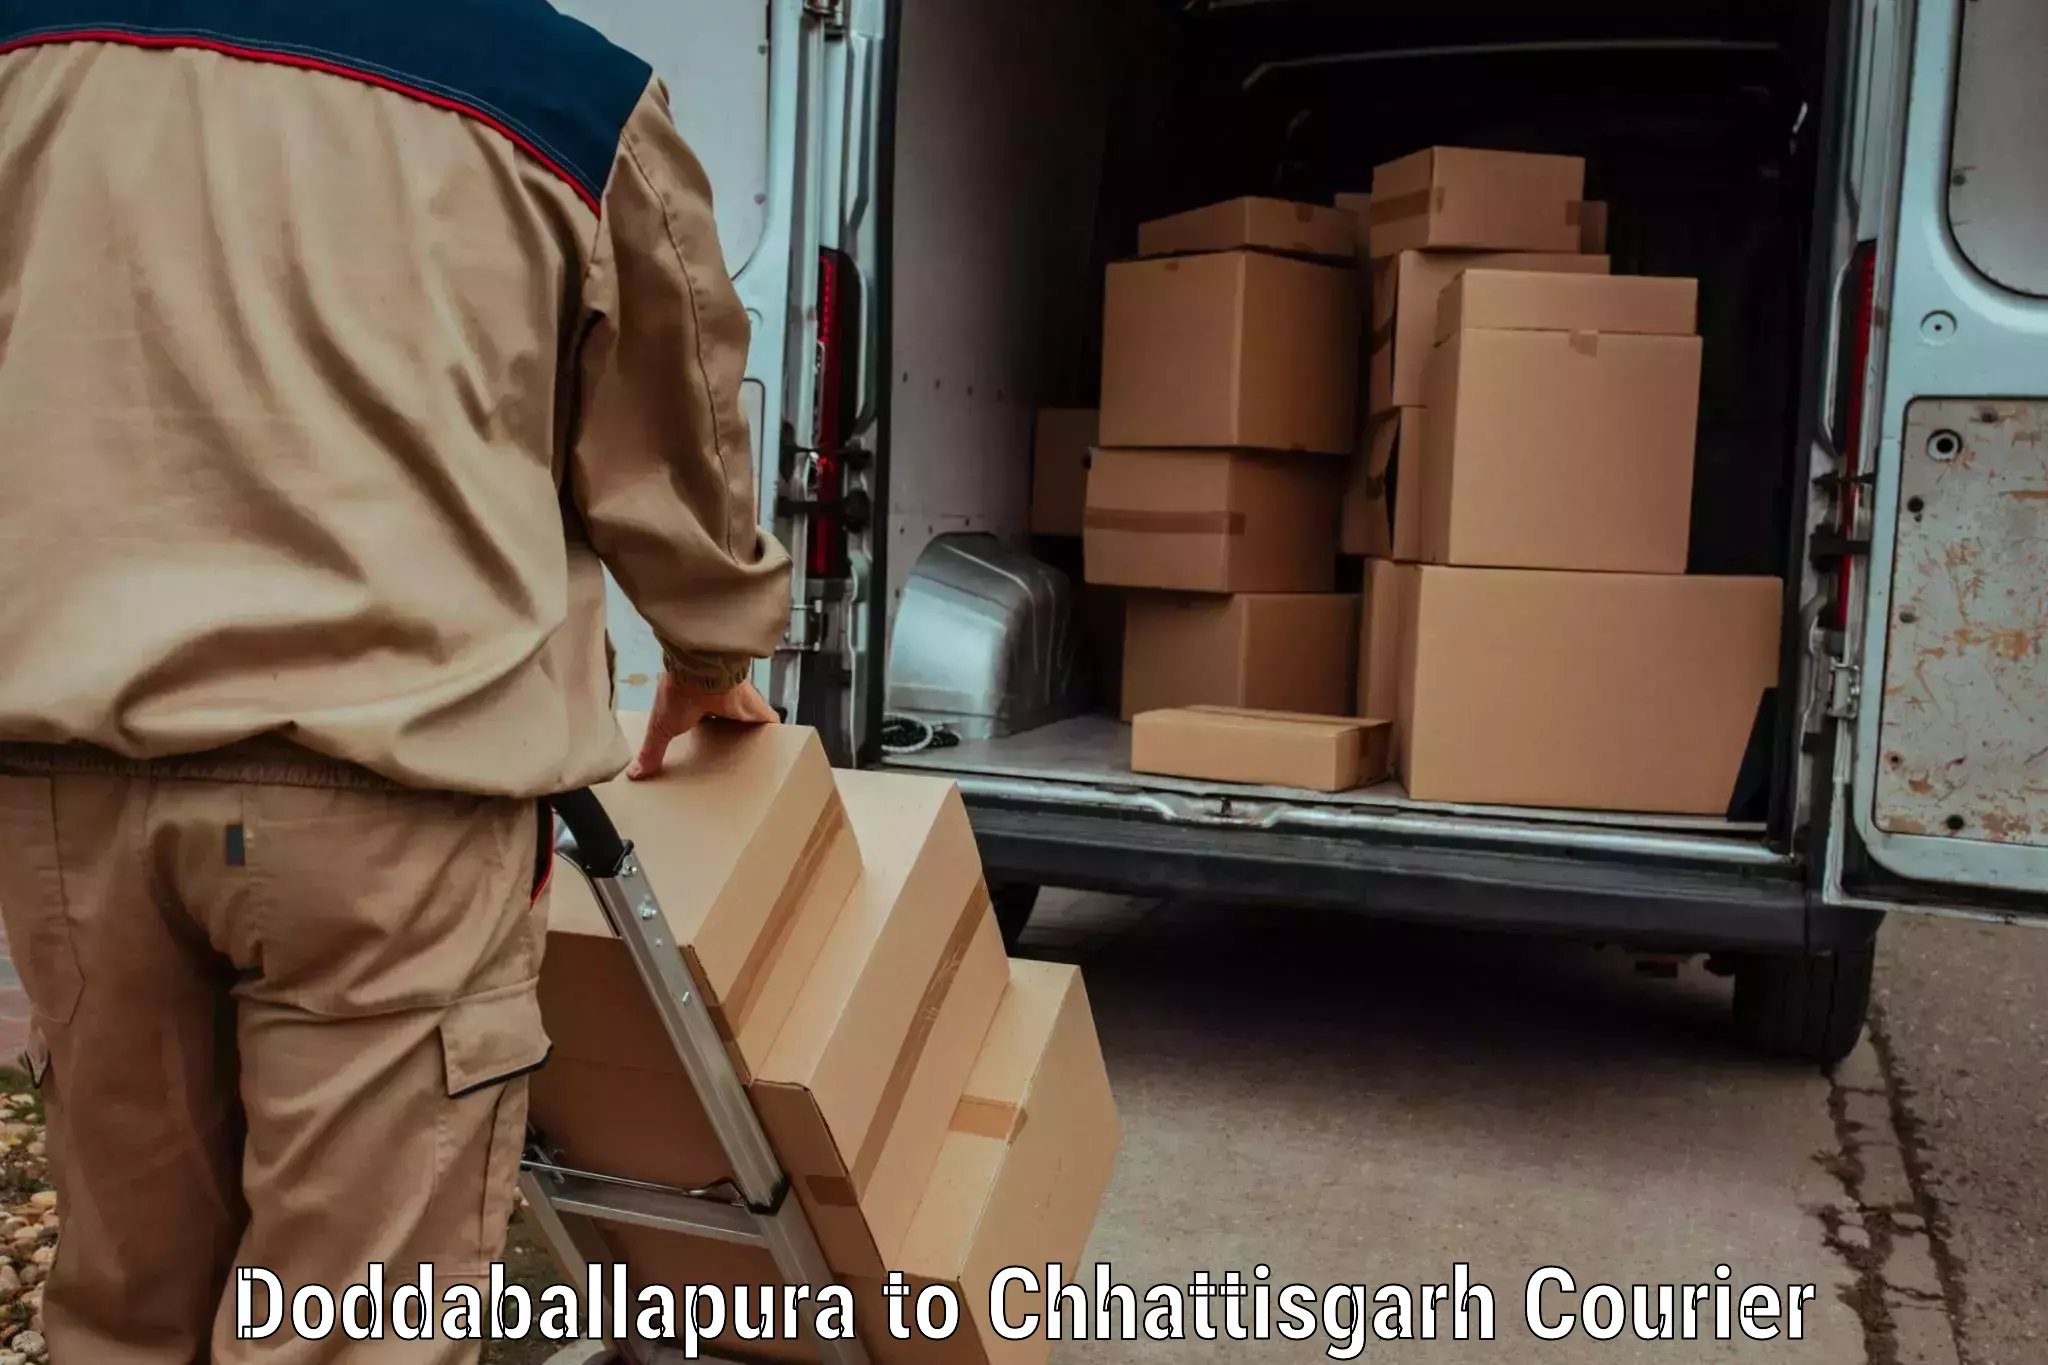 High-speed parcel service Doddaballapura to Korea Chhattisgarh